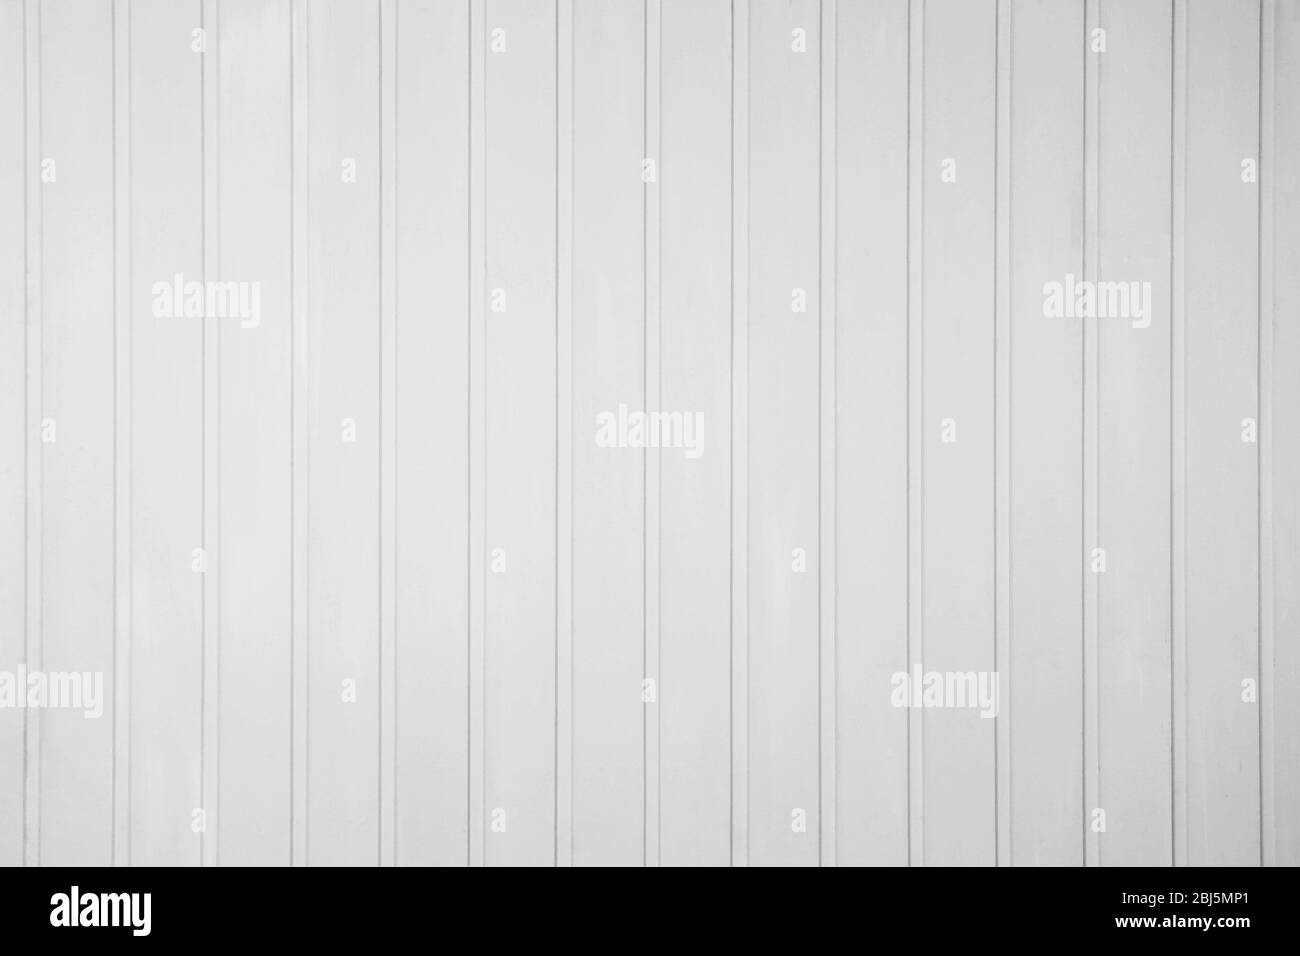 Paneling wall texture Stock Photo